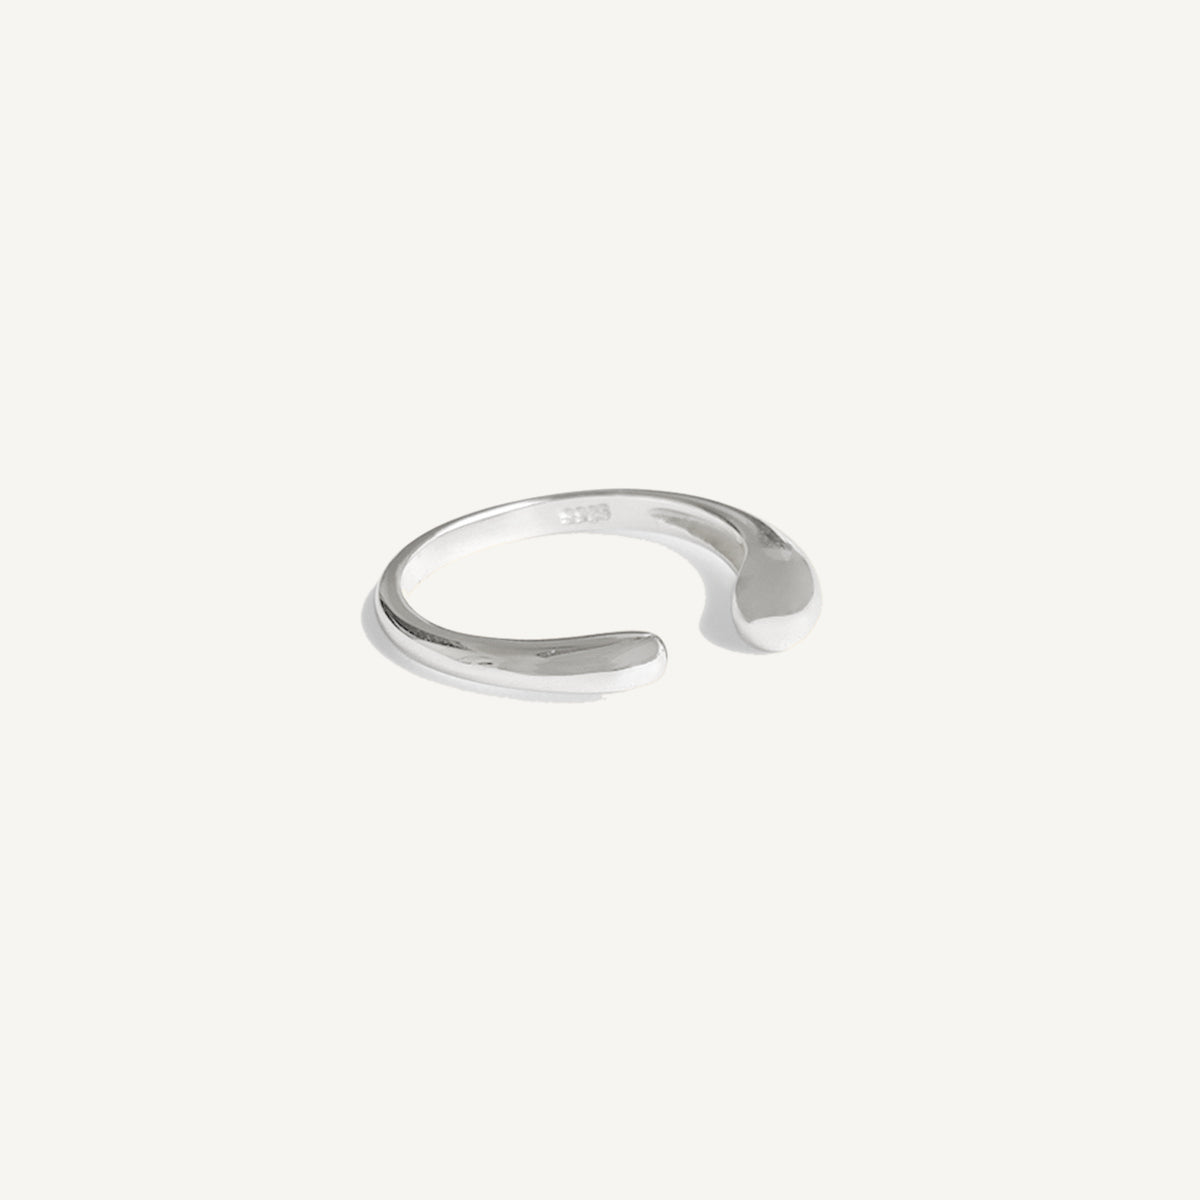 The Any-size Olga Ring